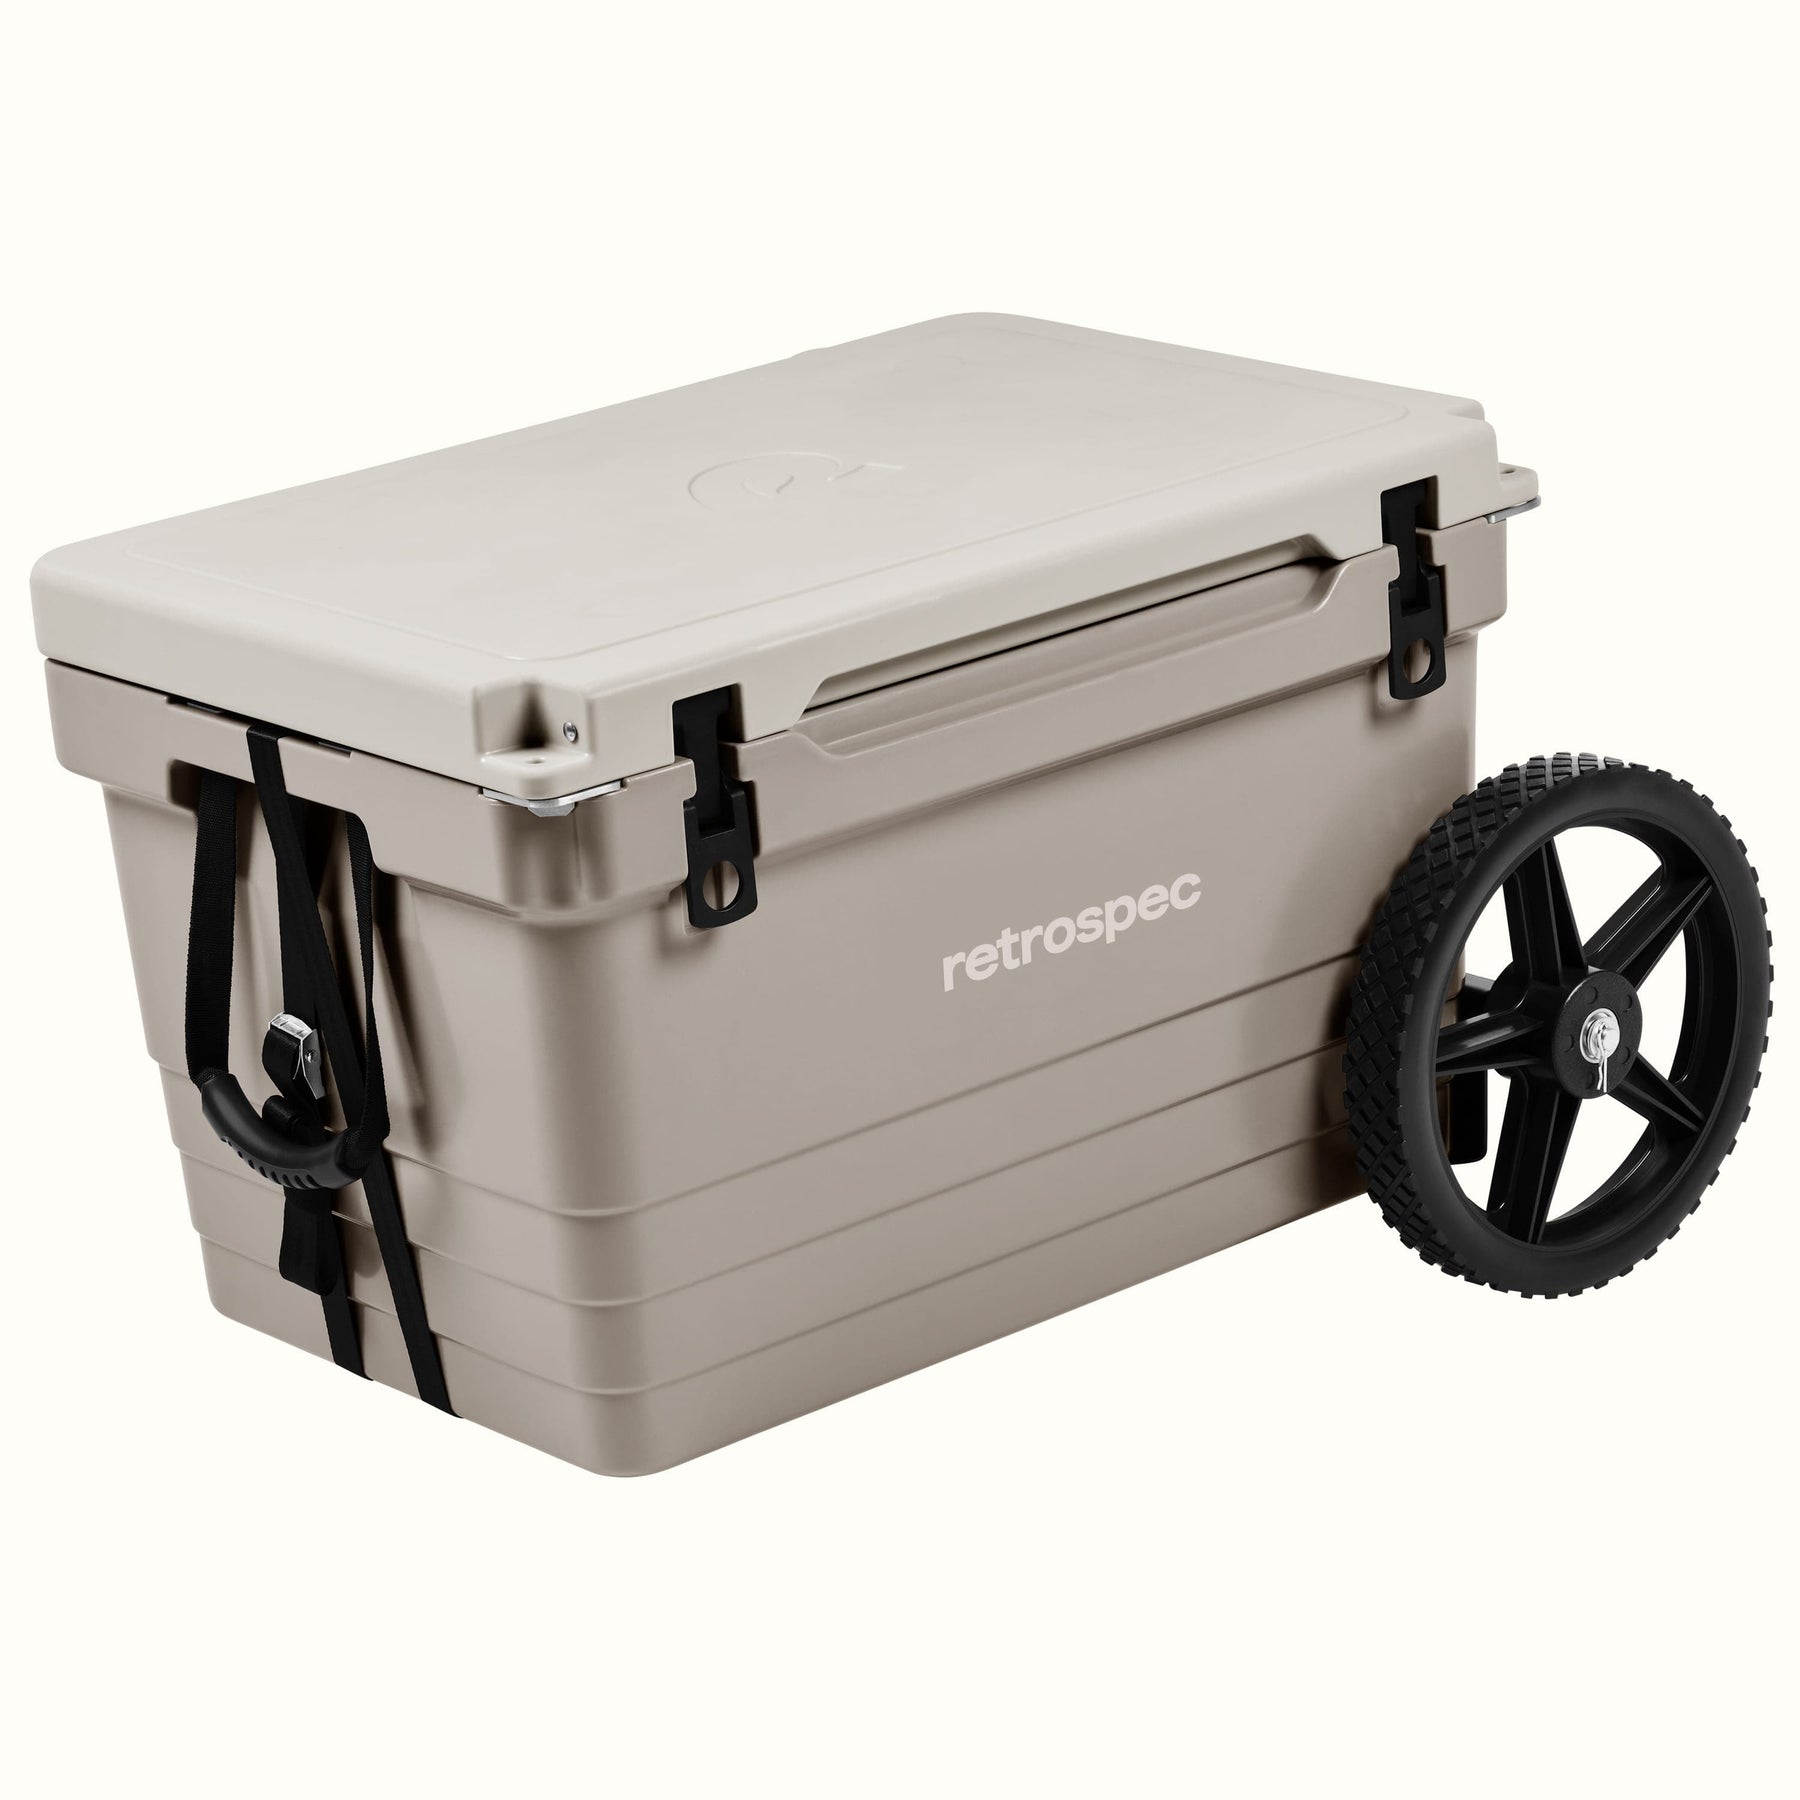 Wheel Kit For 55 qt and 88 qt coolers – Cat Coolers